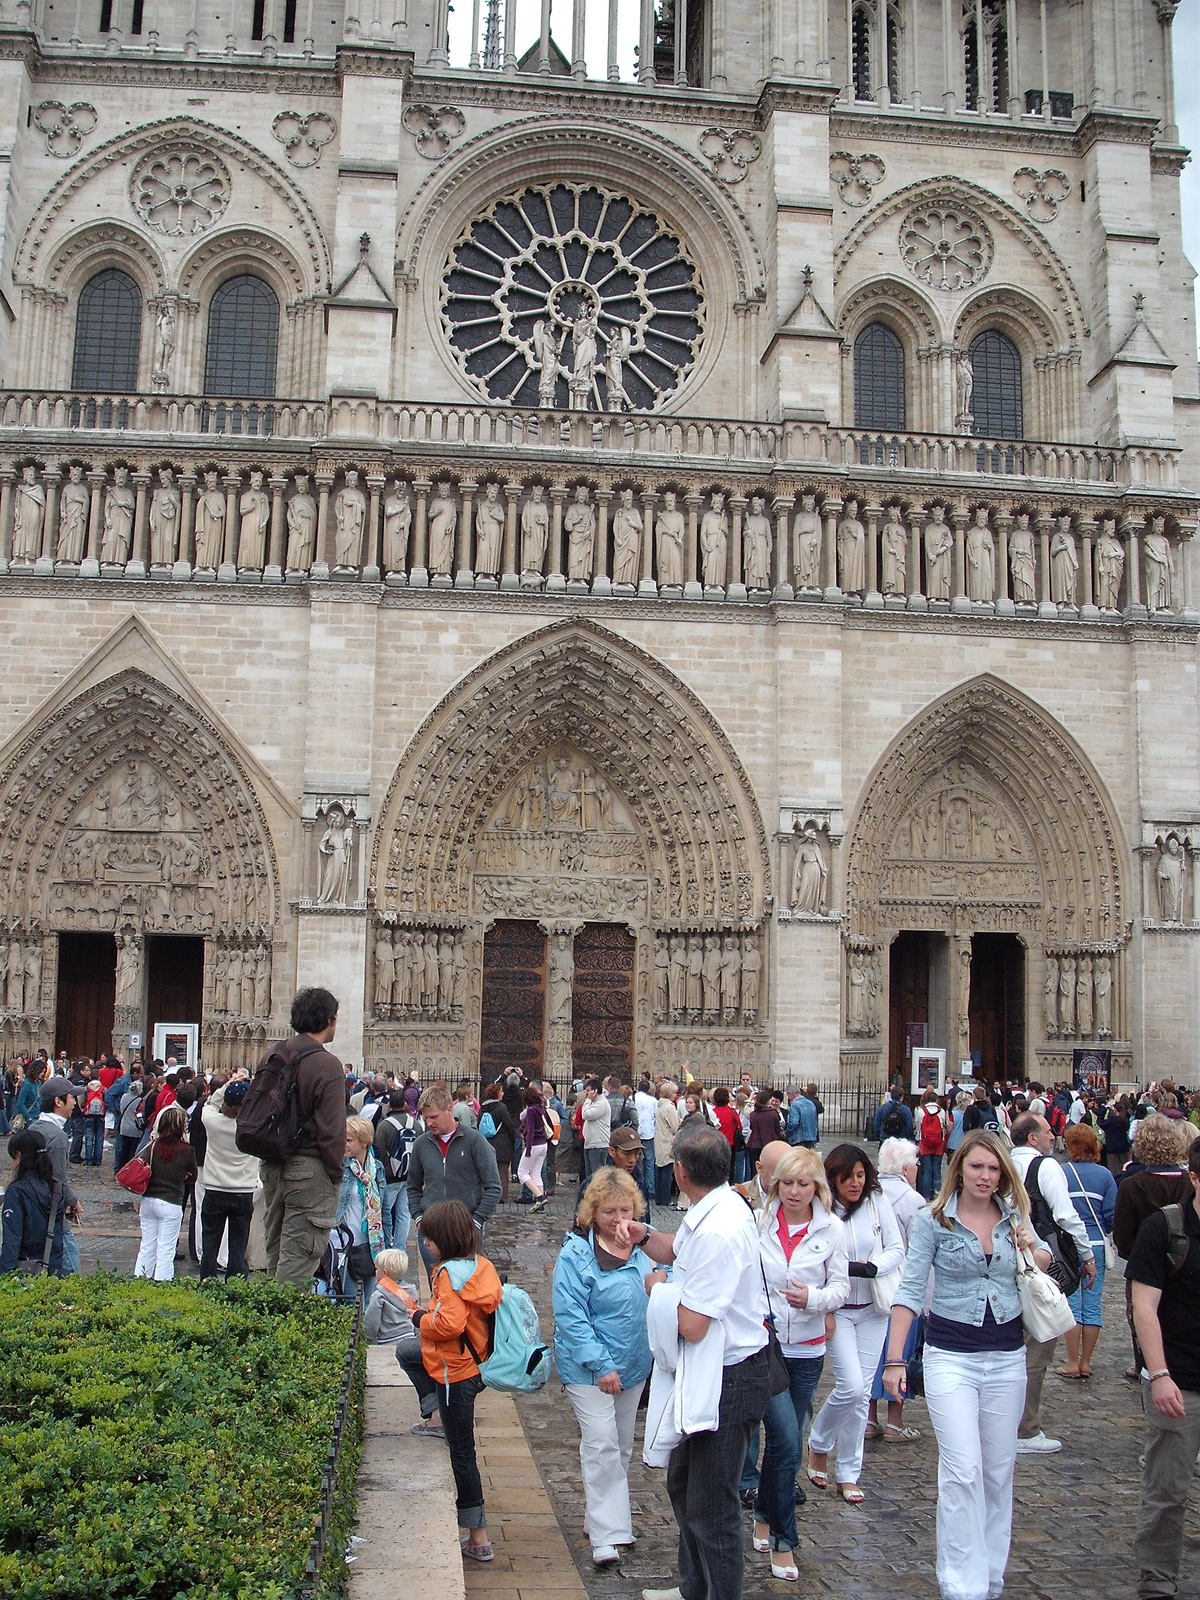 Notre-Dame bejárata